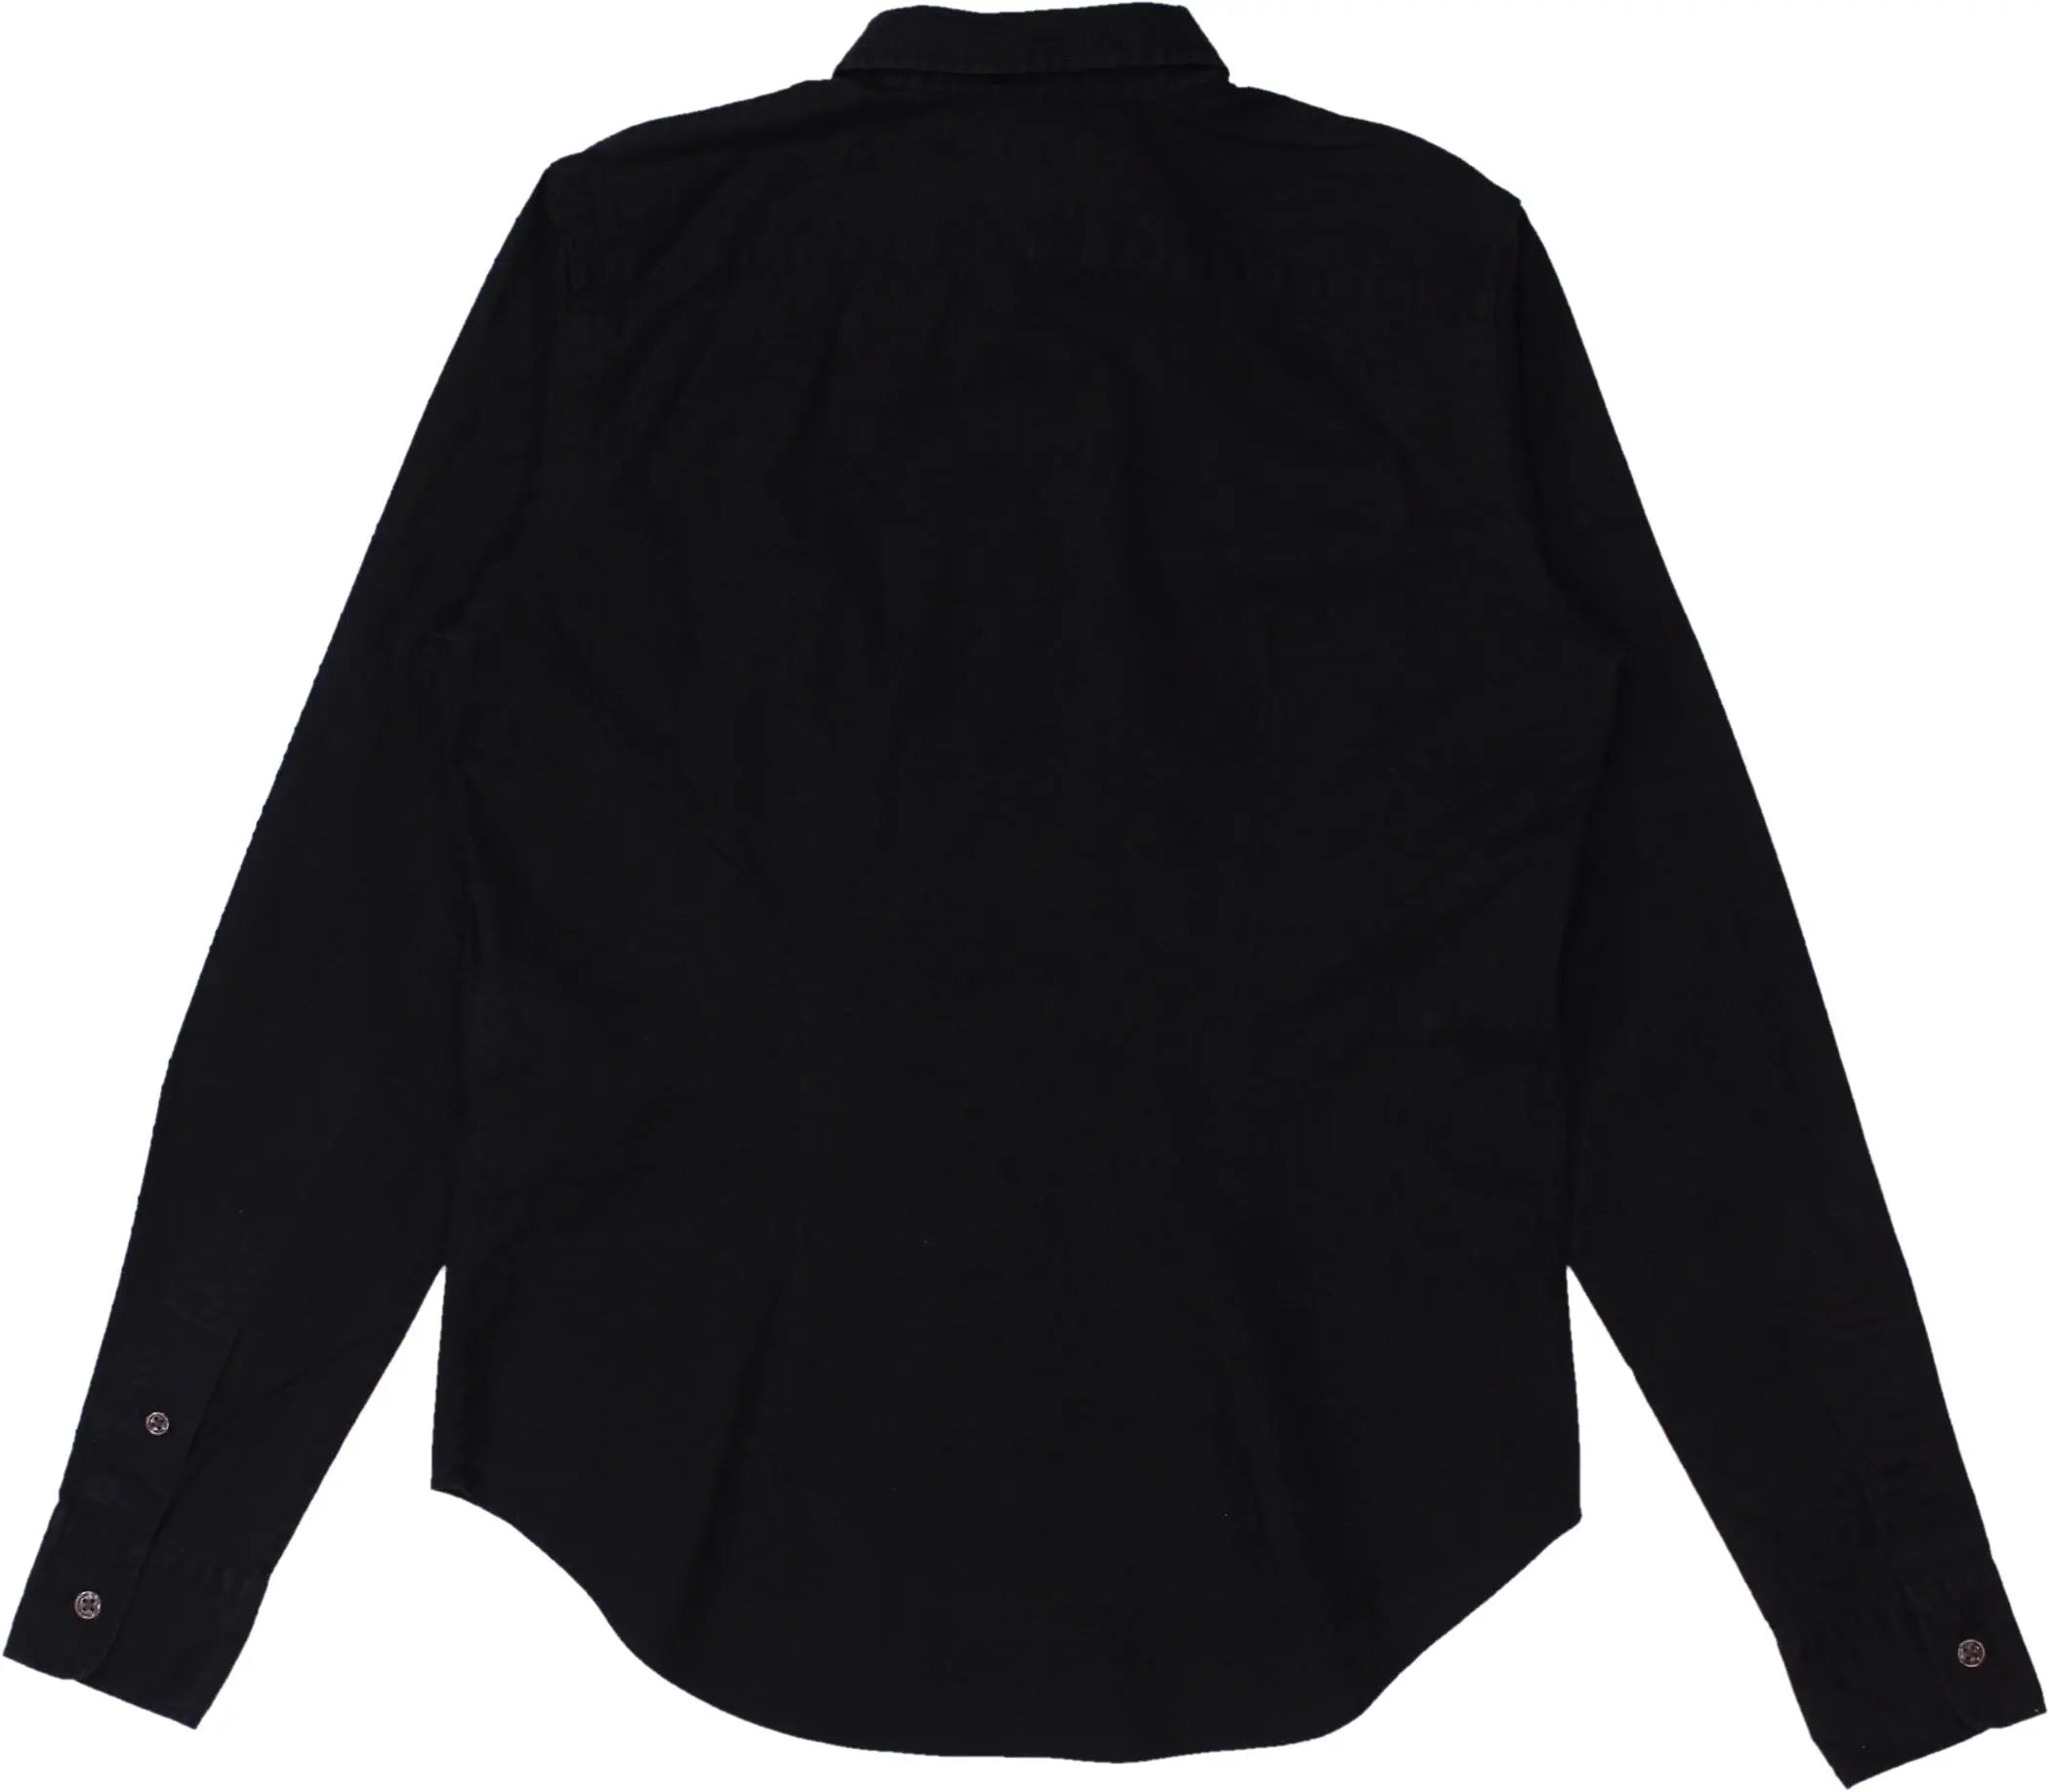 Ralph Lauren - Black Slim Fit Blouse by Ralph Lauren- ThriftTale.com - Vintage and second handclothing